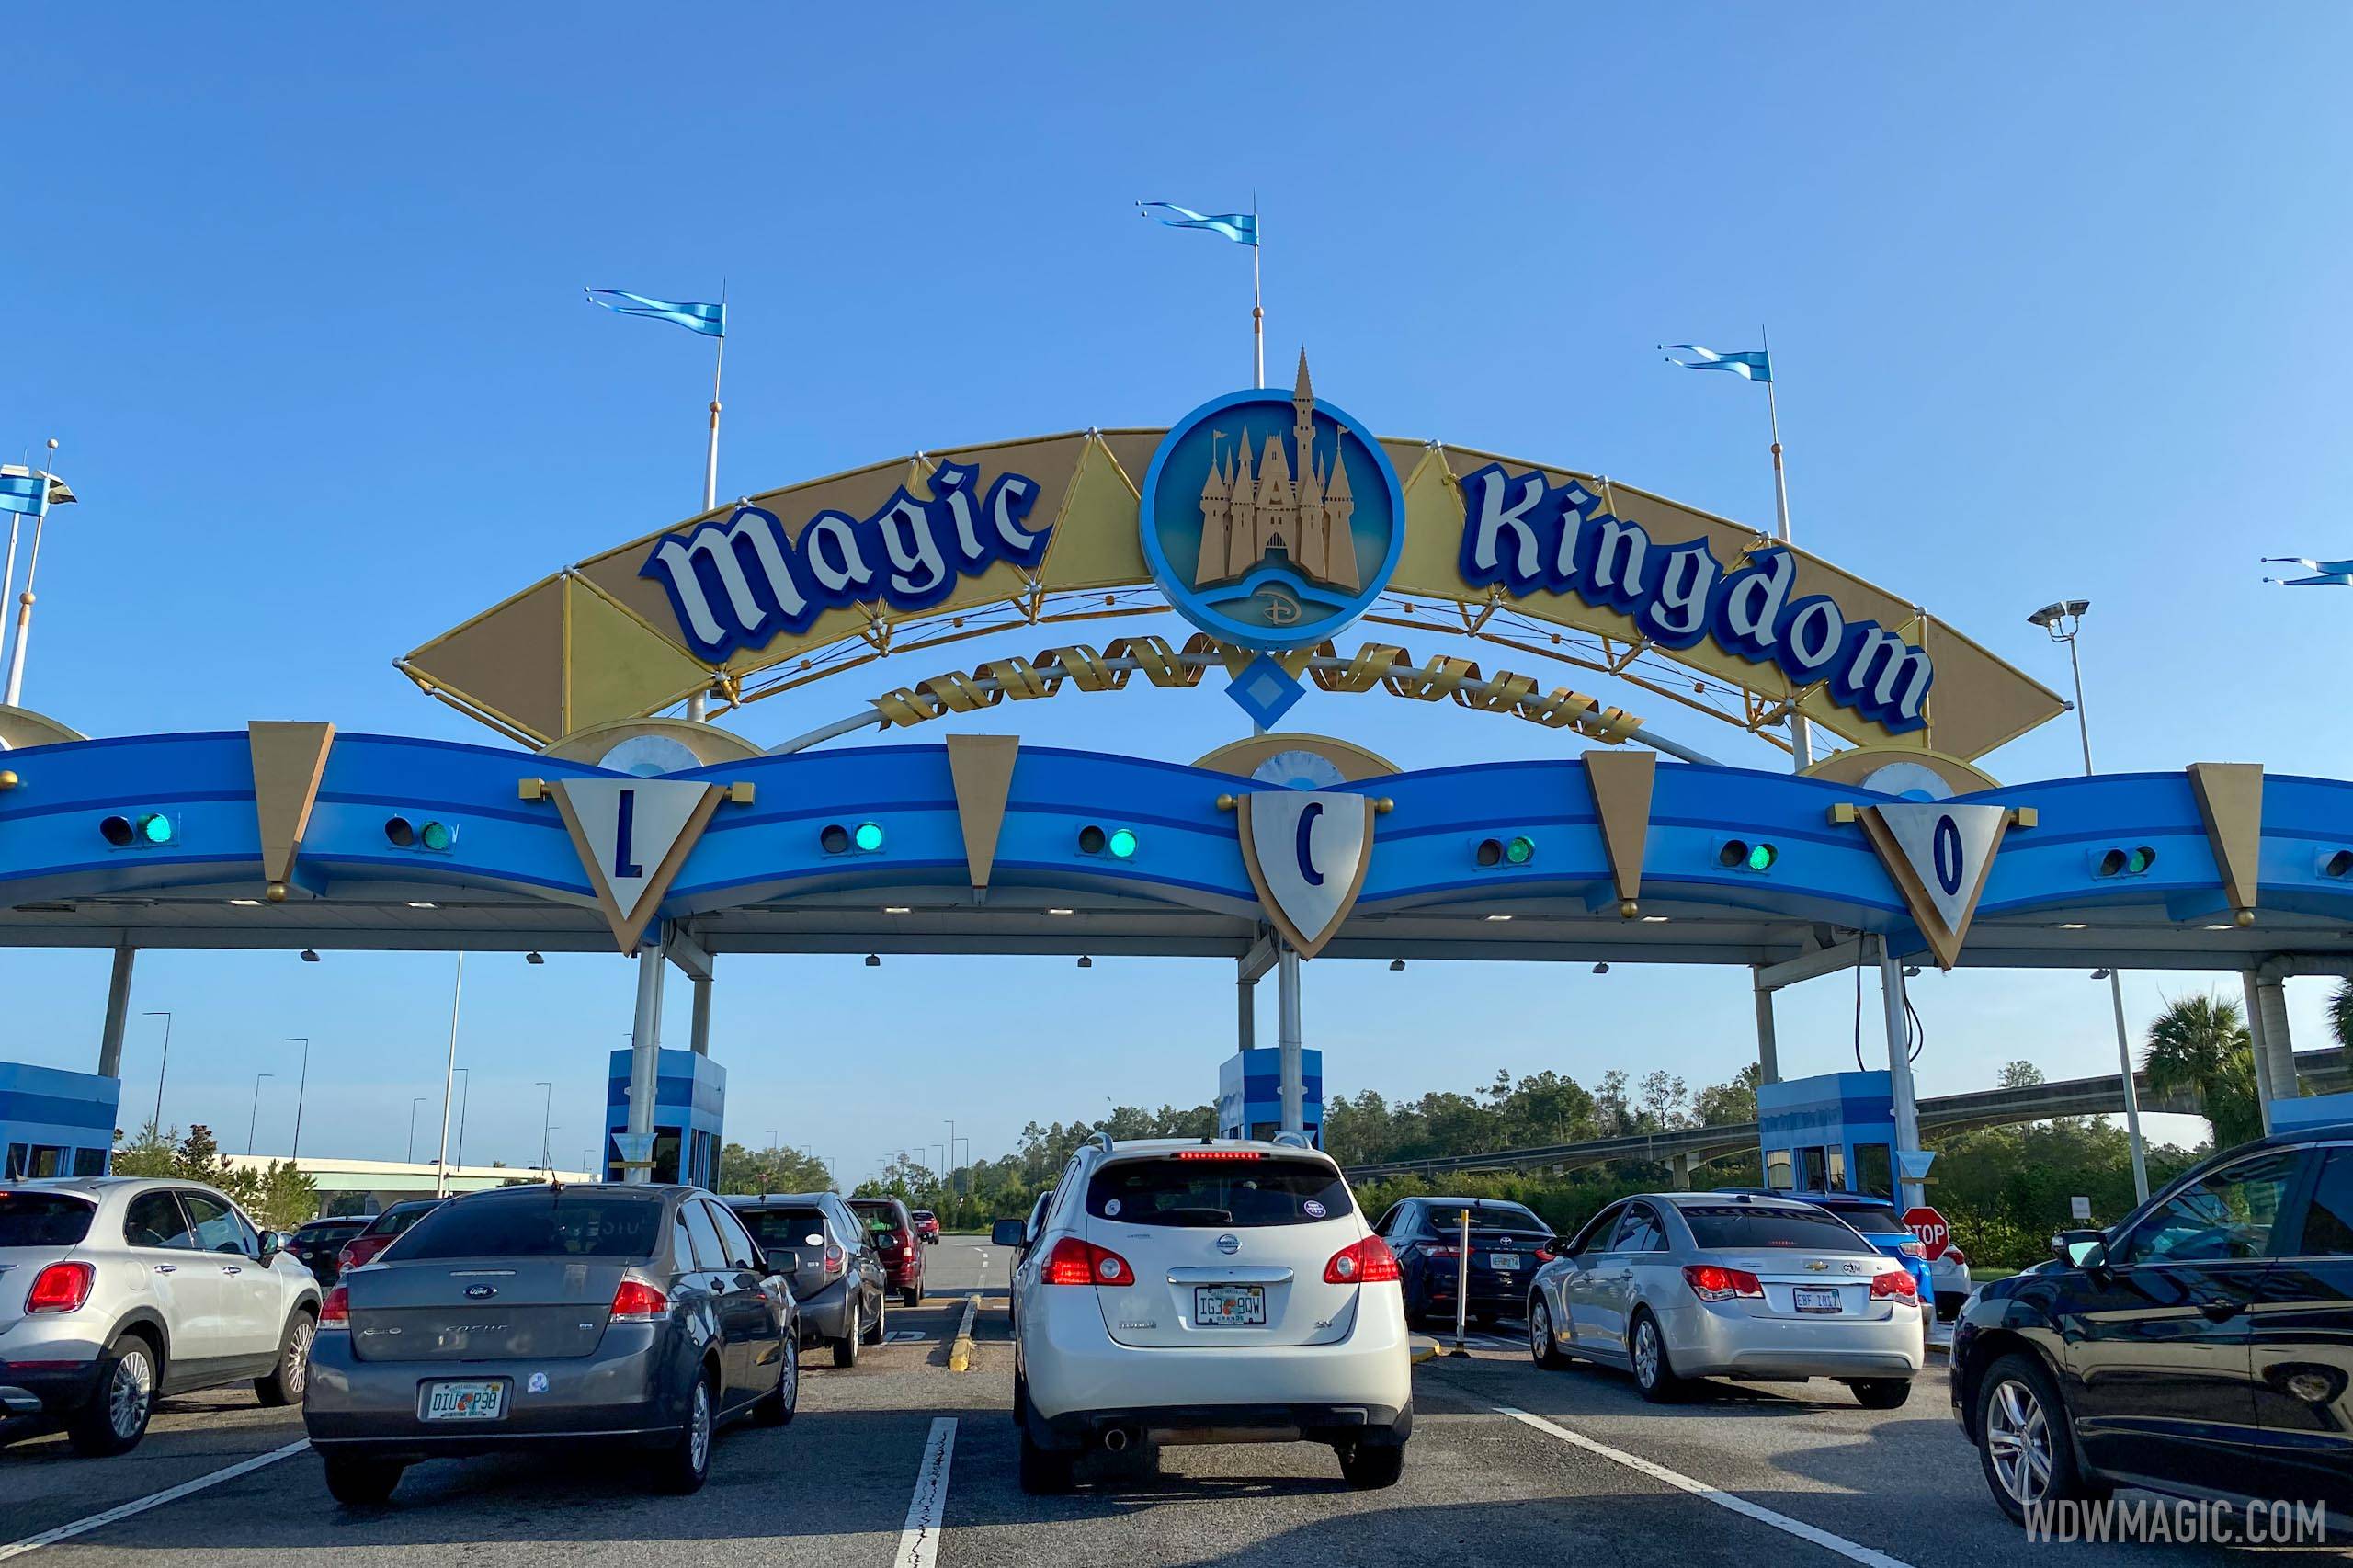 Magic Kingdom auto plaza opened 1 hour before park opening